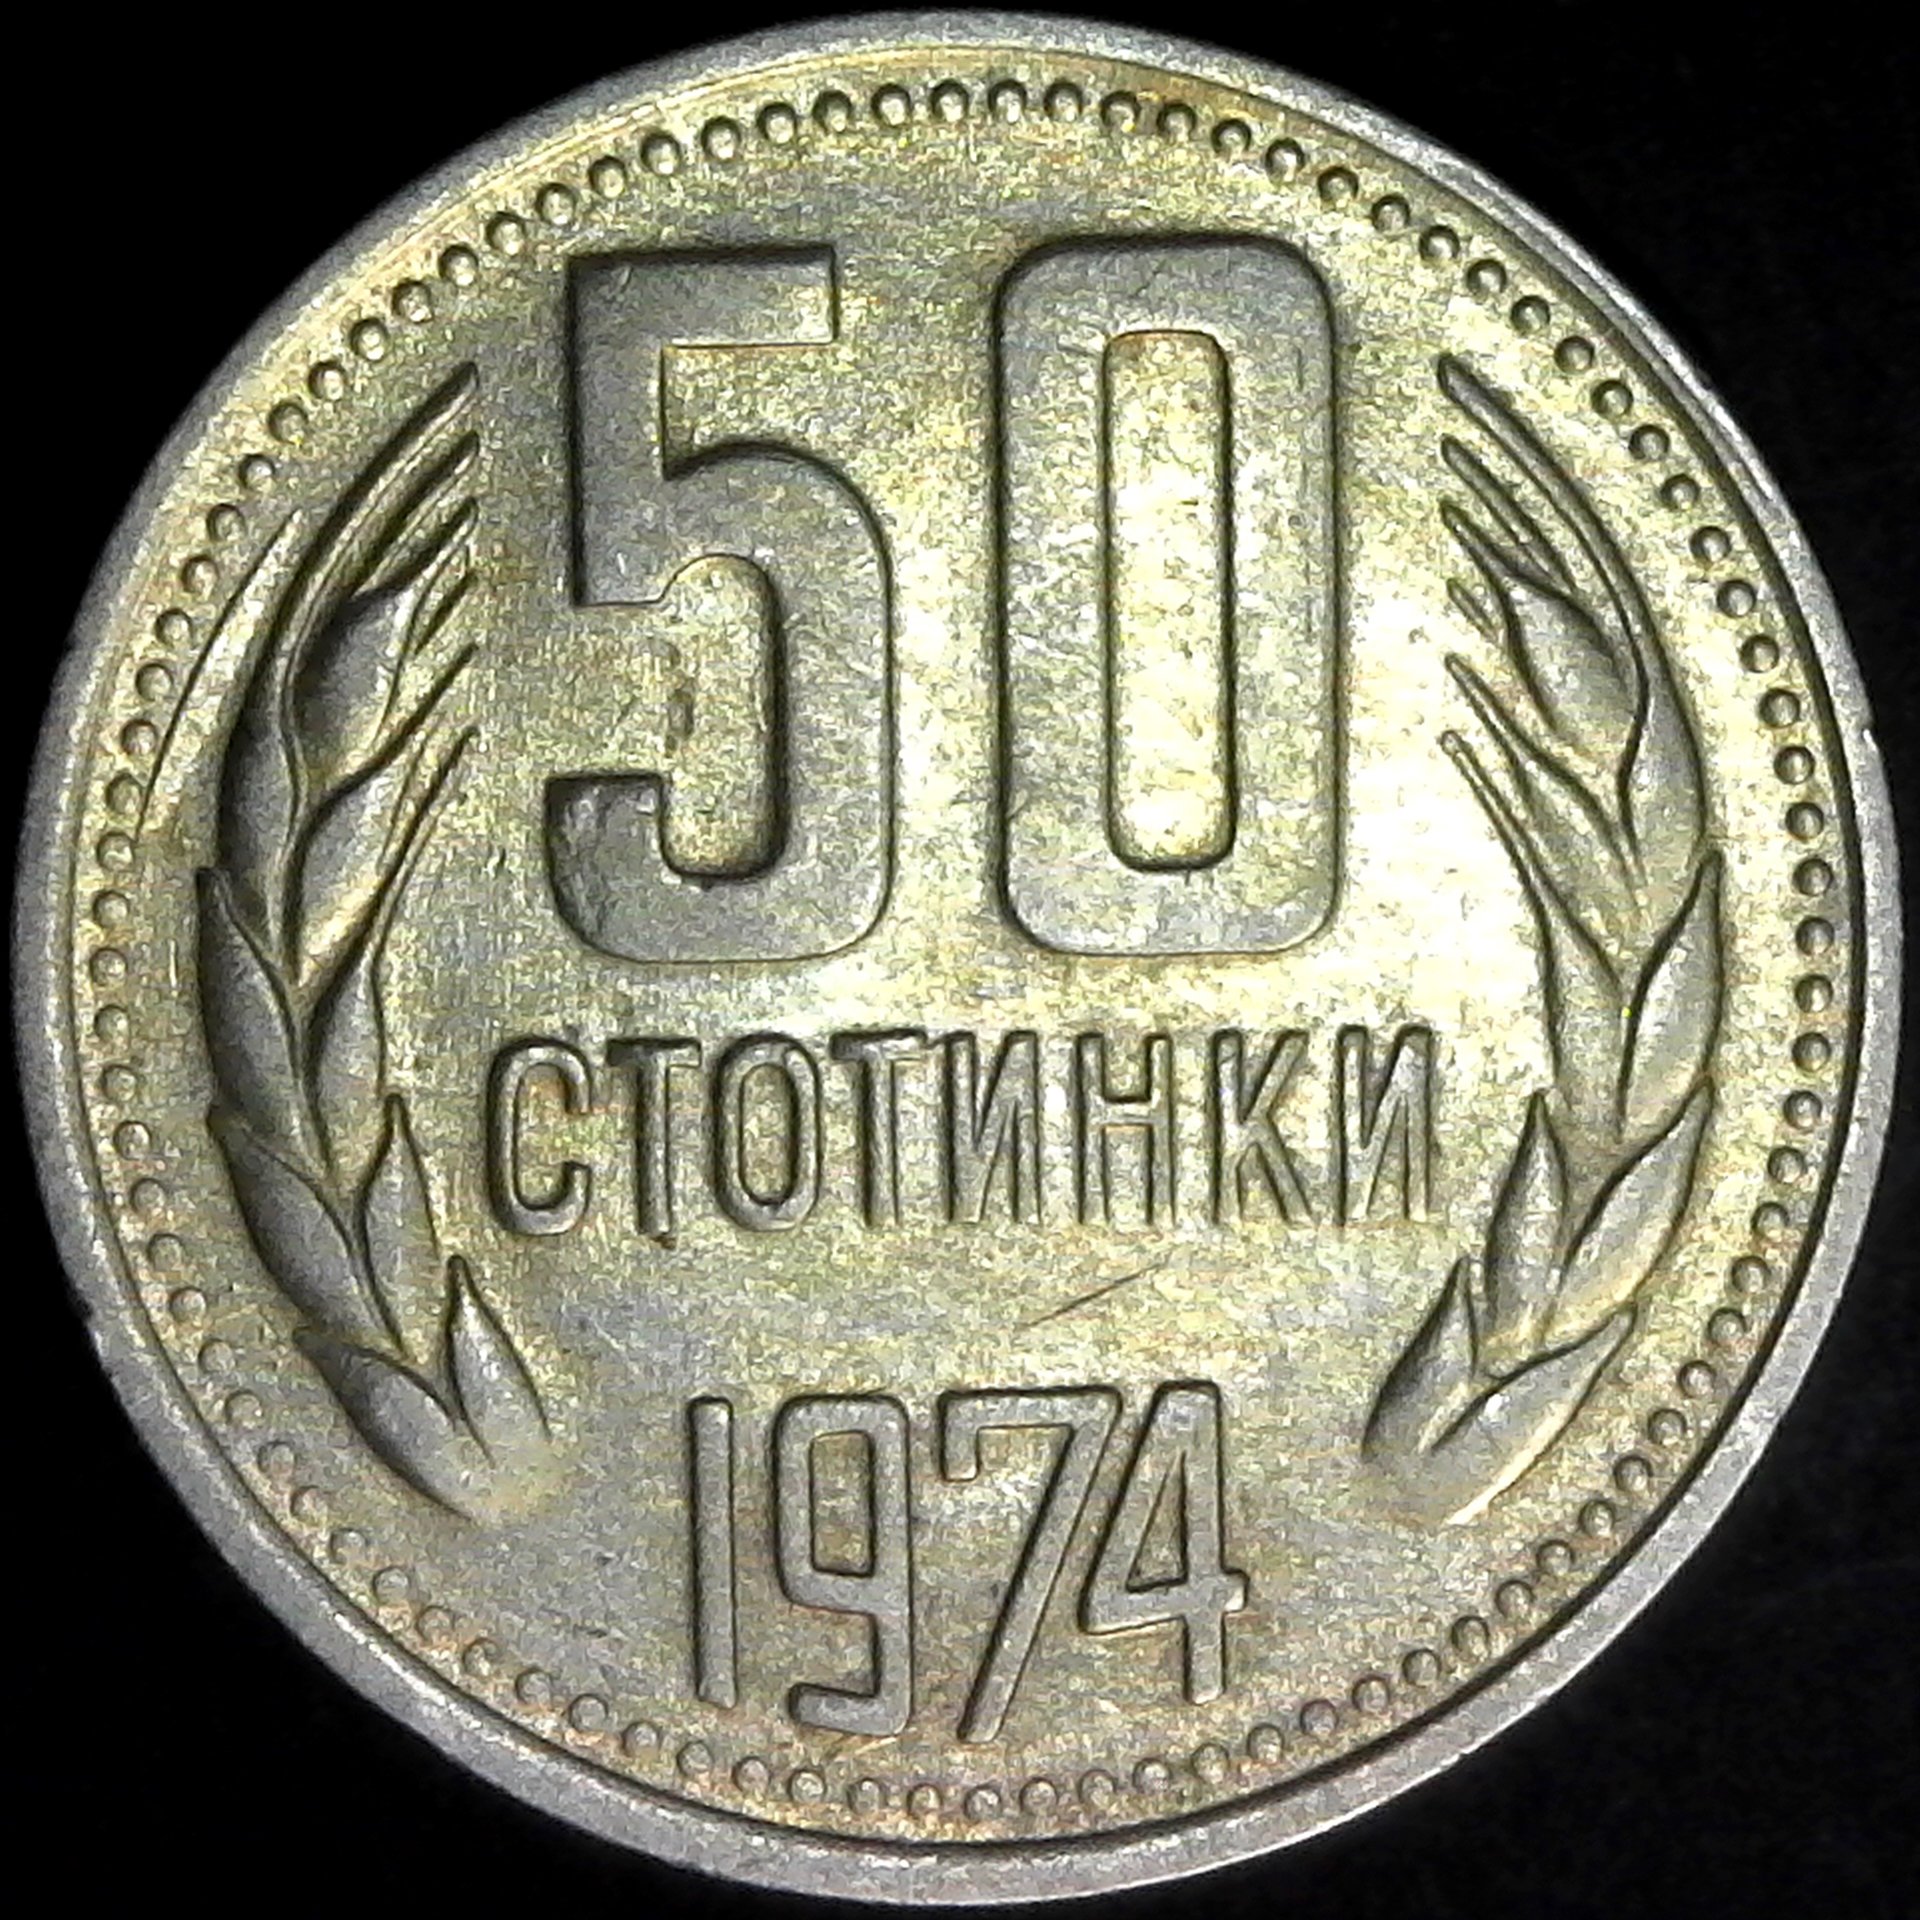 Bulgaria 50 Stotinki, 1974 rev.jpg